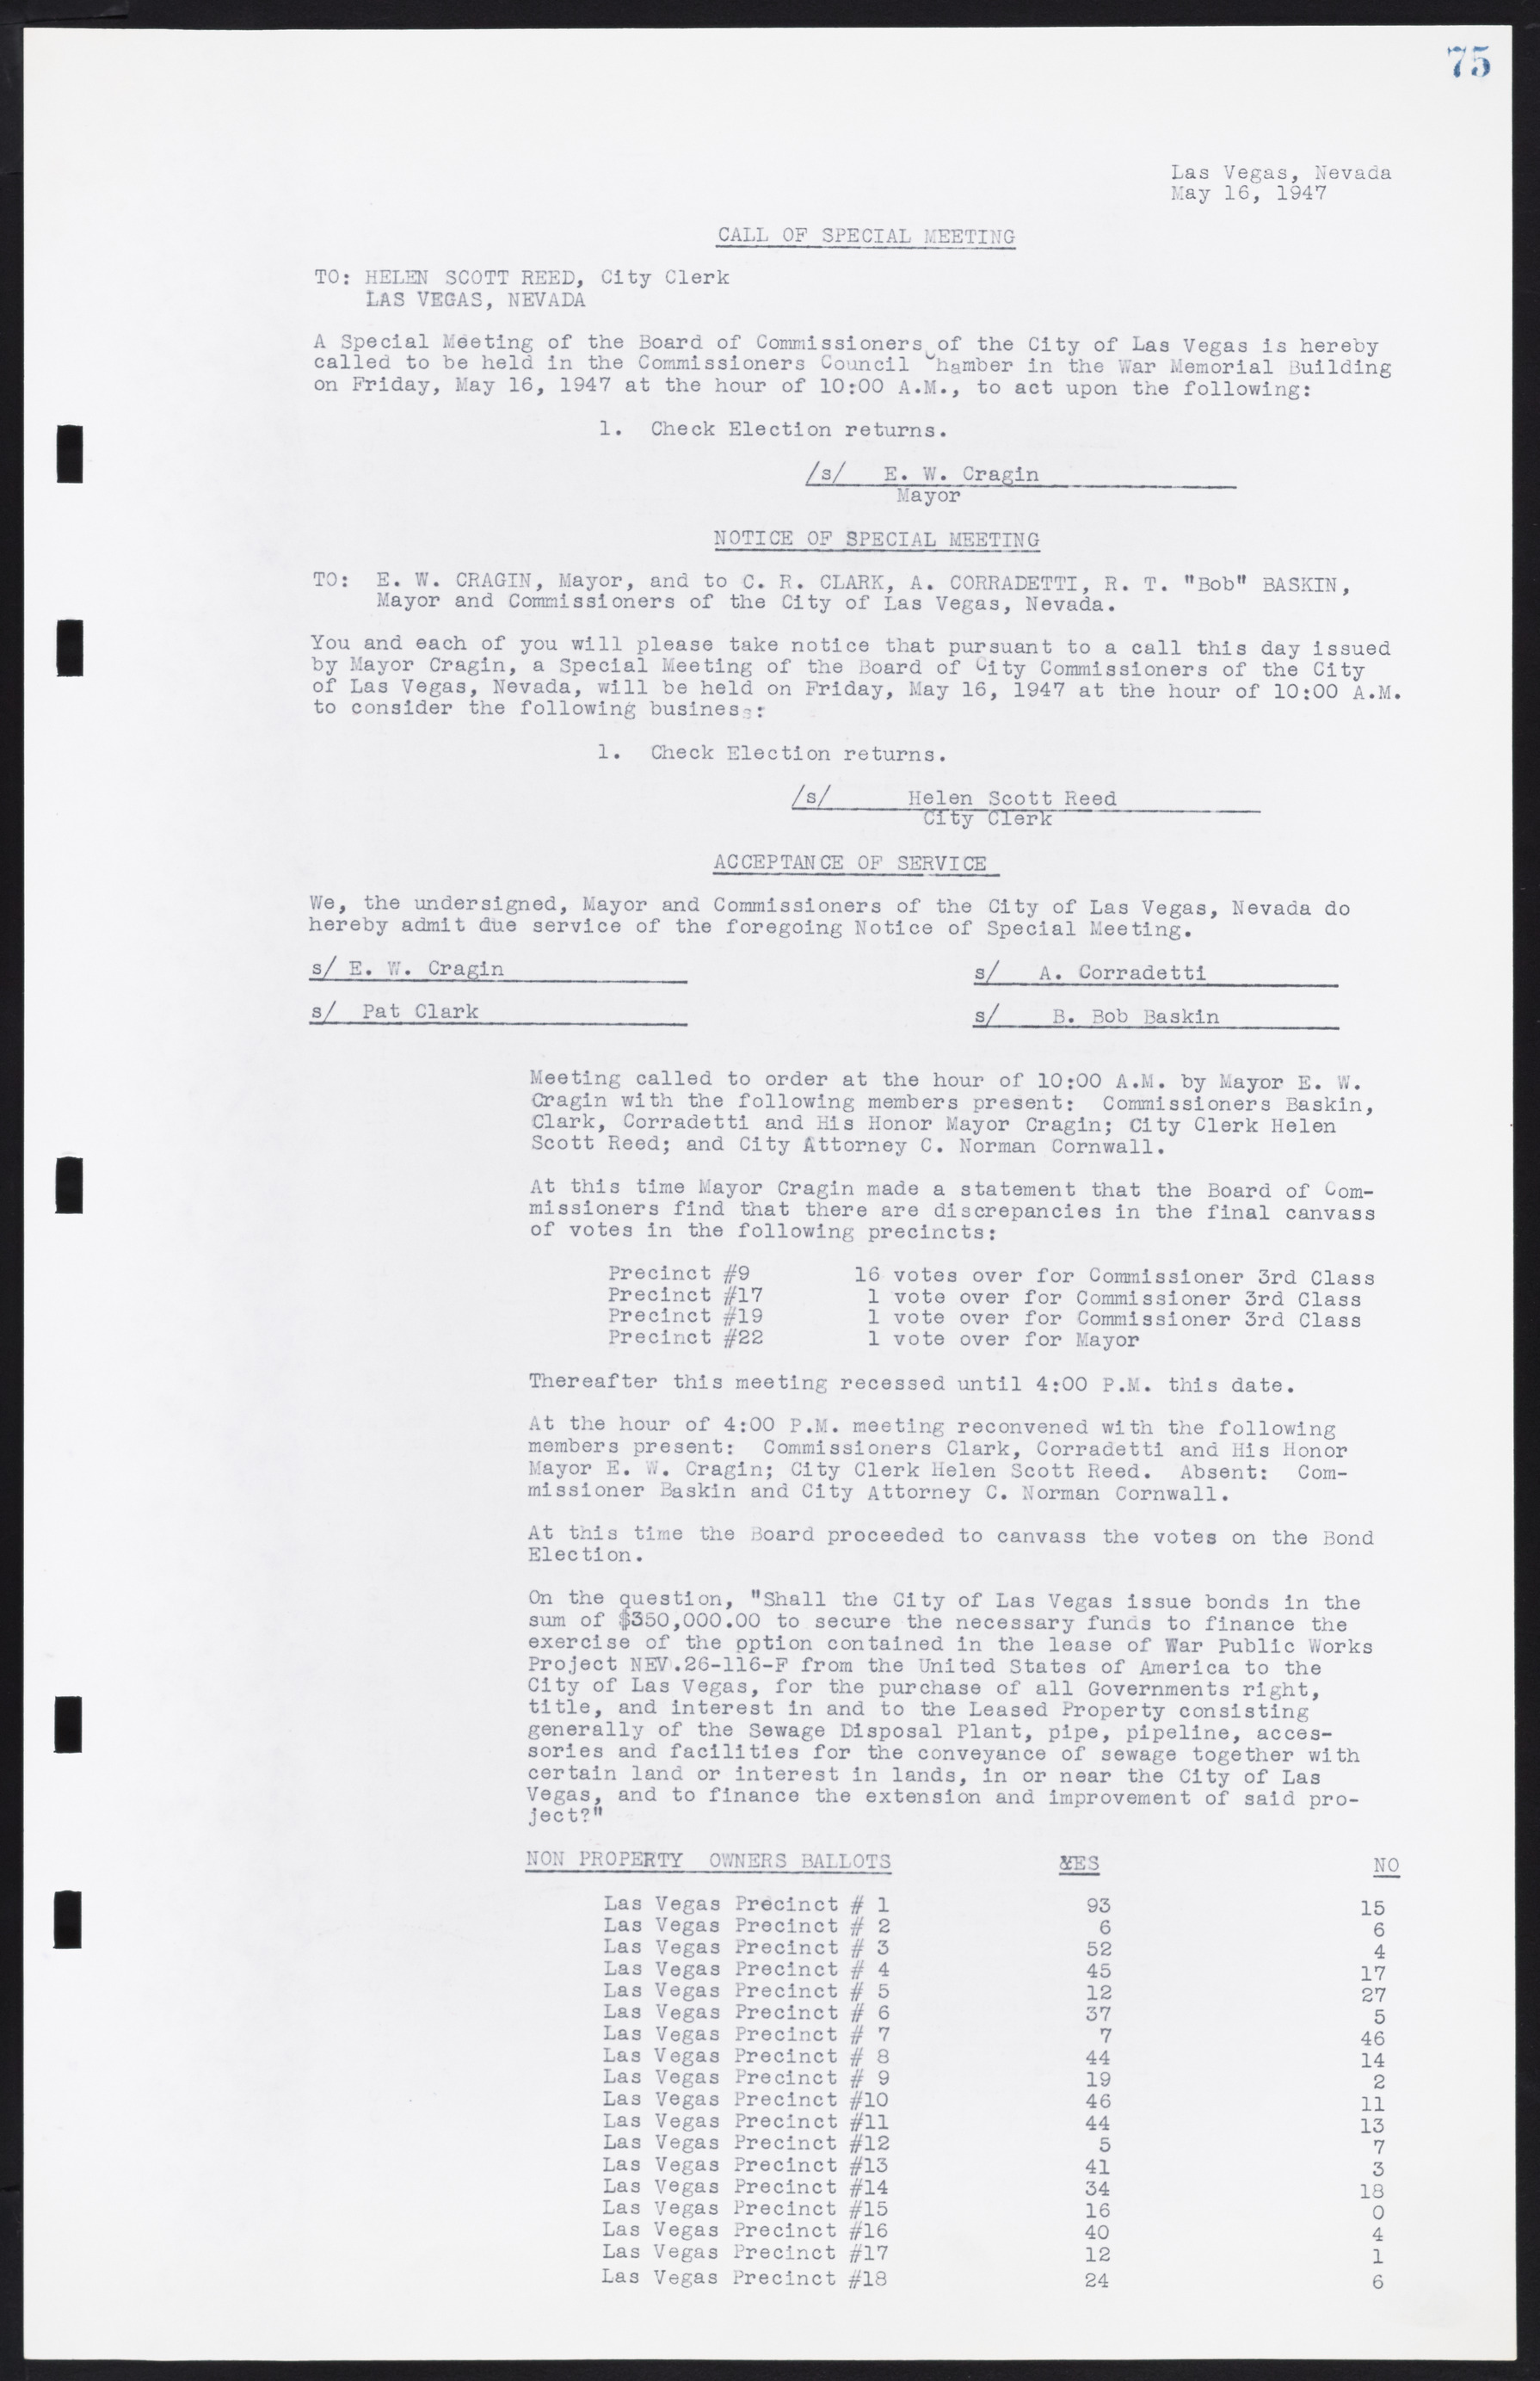 Las Vegas City Commission Minutes, January 7, 1947 to October 26, 1949, lvc000006-90